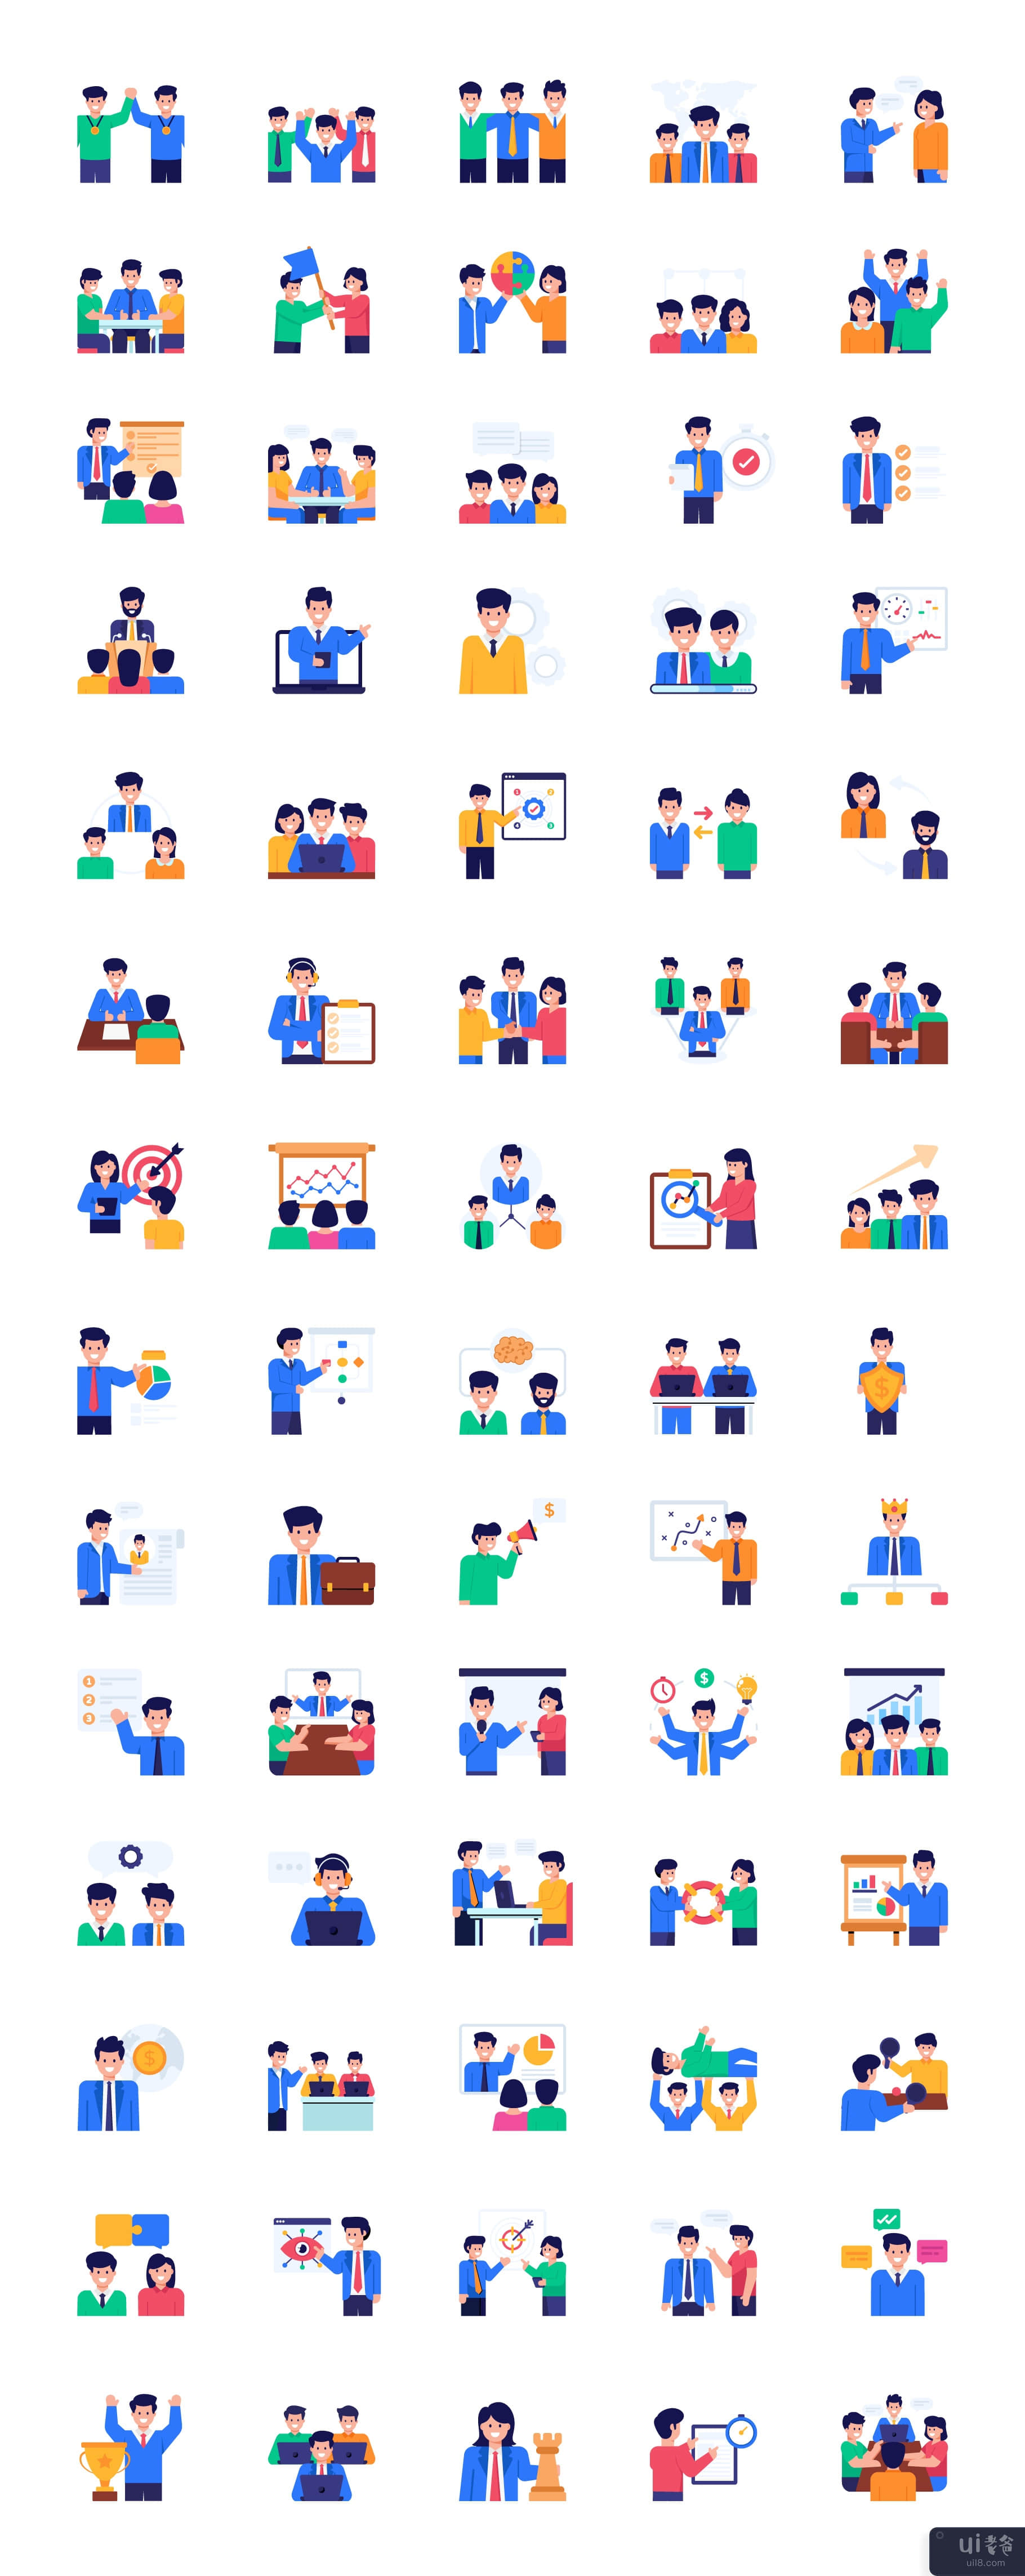 70 团队合作字符矢量图标(70 Teamwork Character Vector Icons)插图